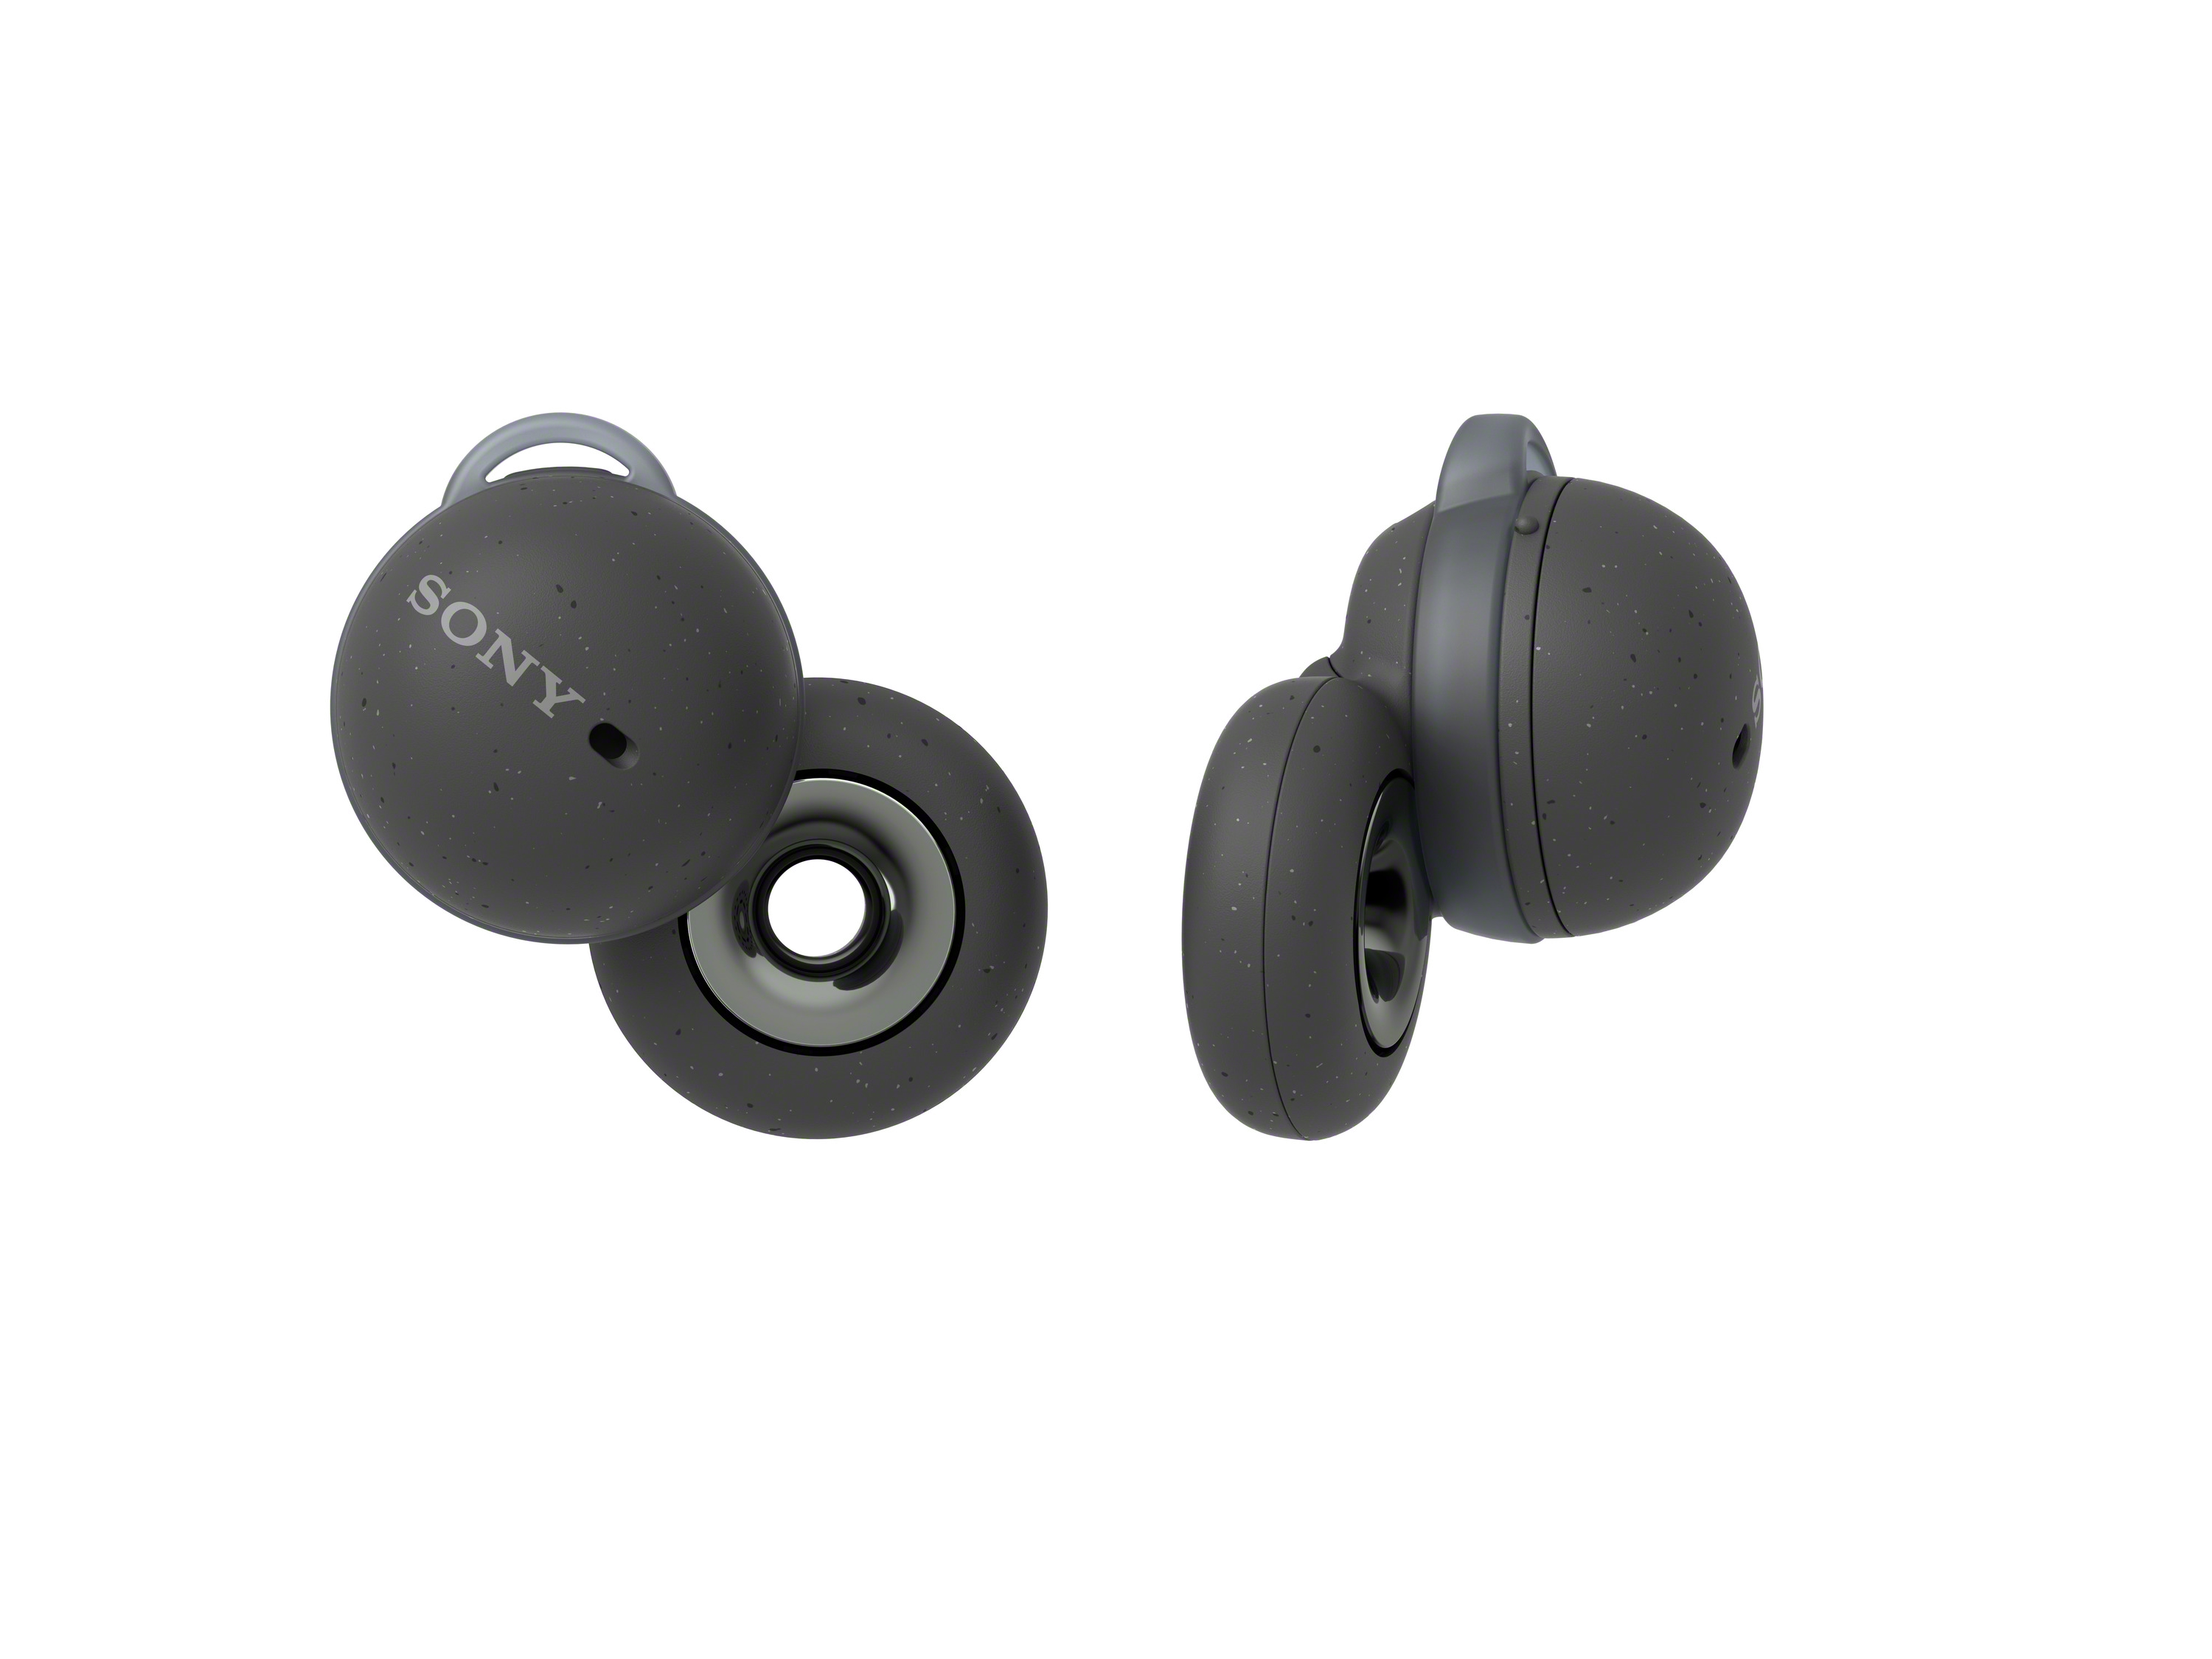 Ambient genetisch Marine Huur Sony LinkBuds In-ear hoofdtelefoon met Bluetooth vanaf 5,90 € per maand